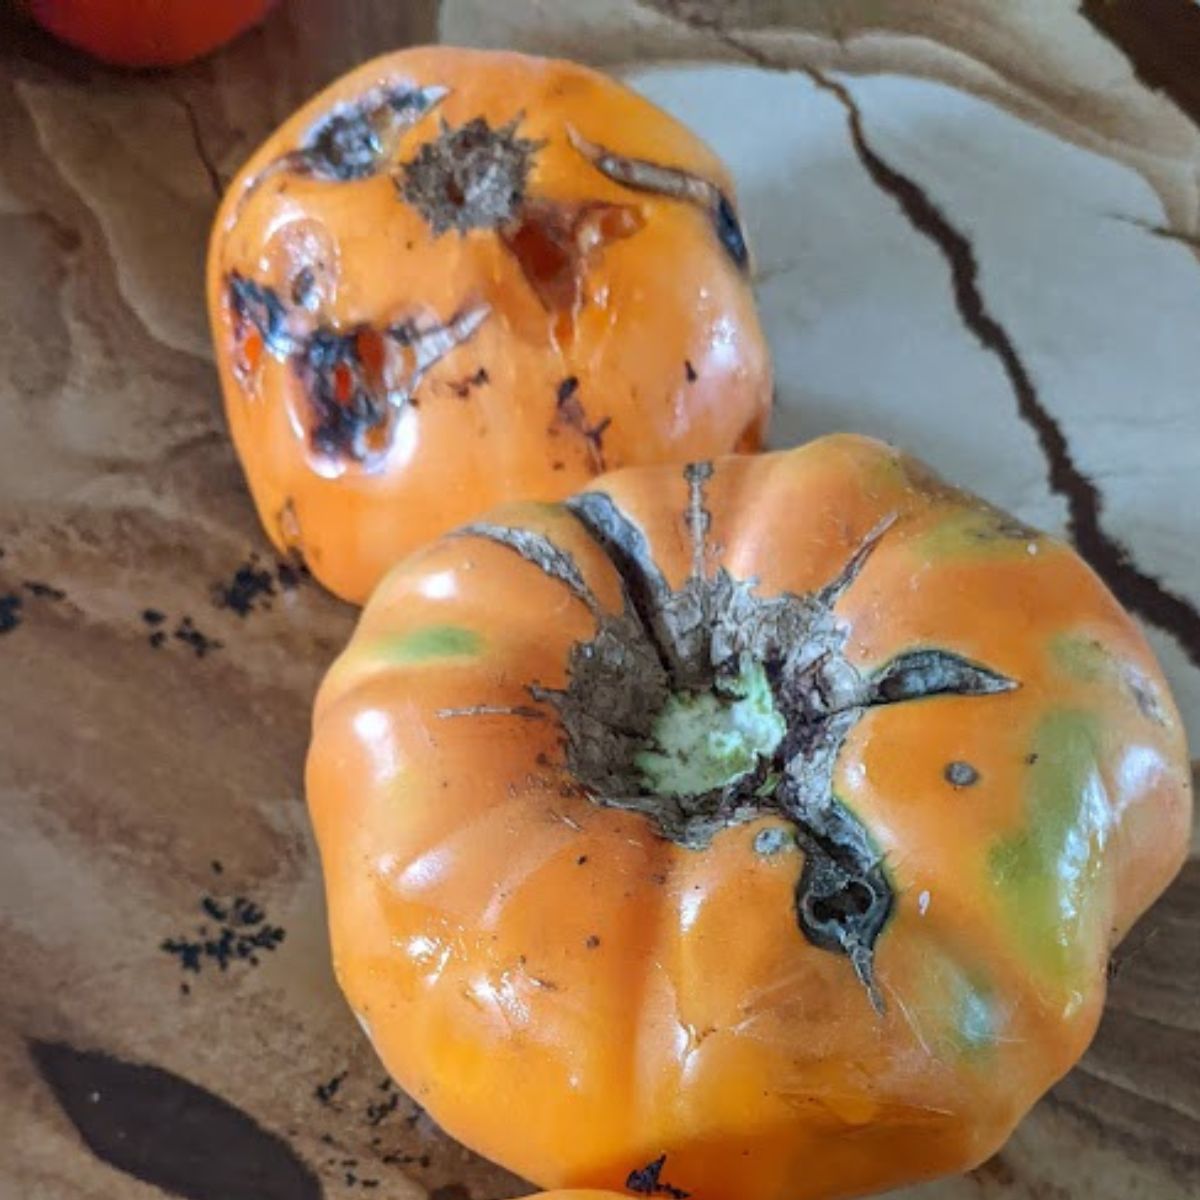 diseased orange tomatoes